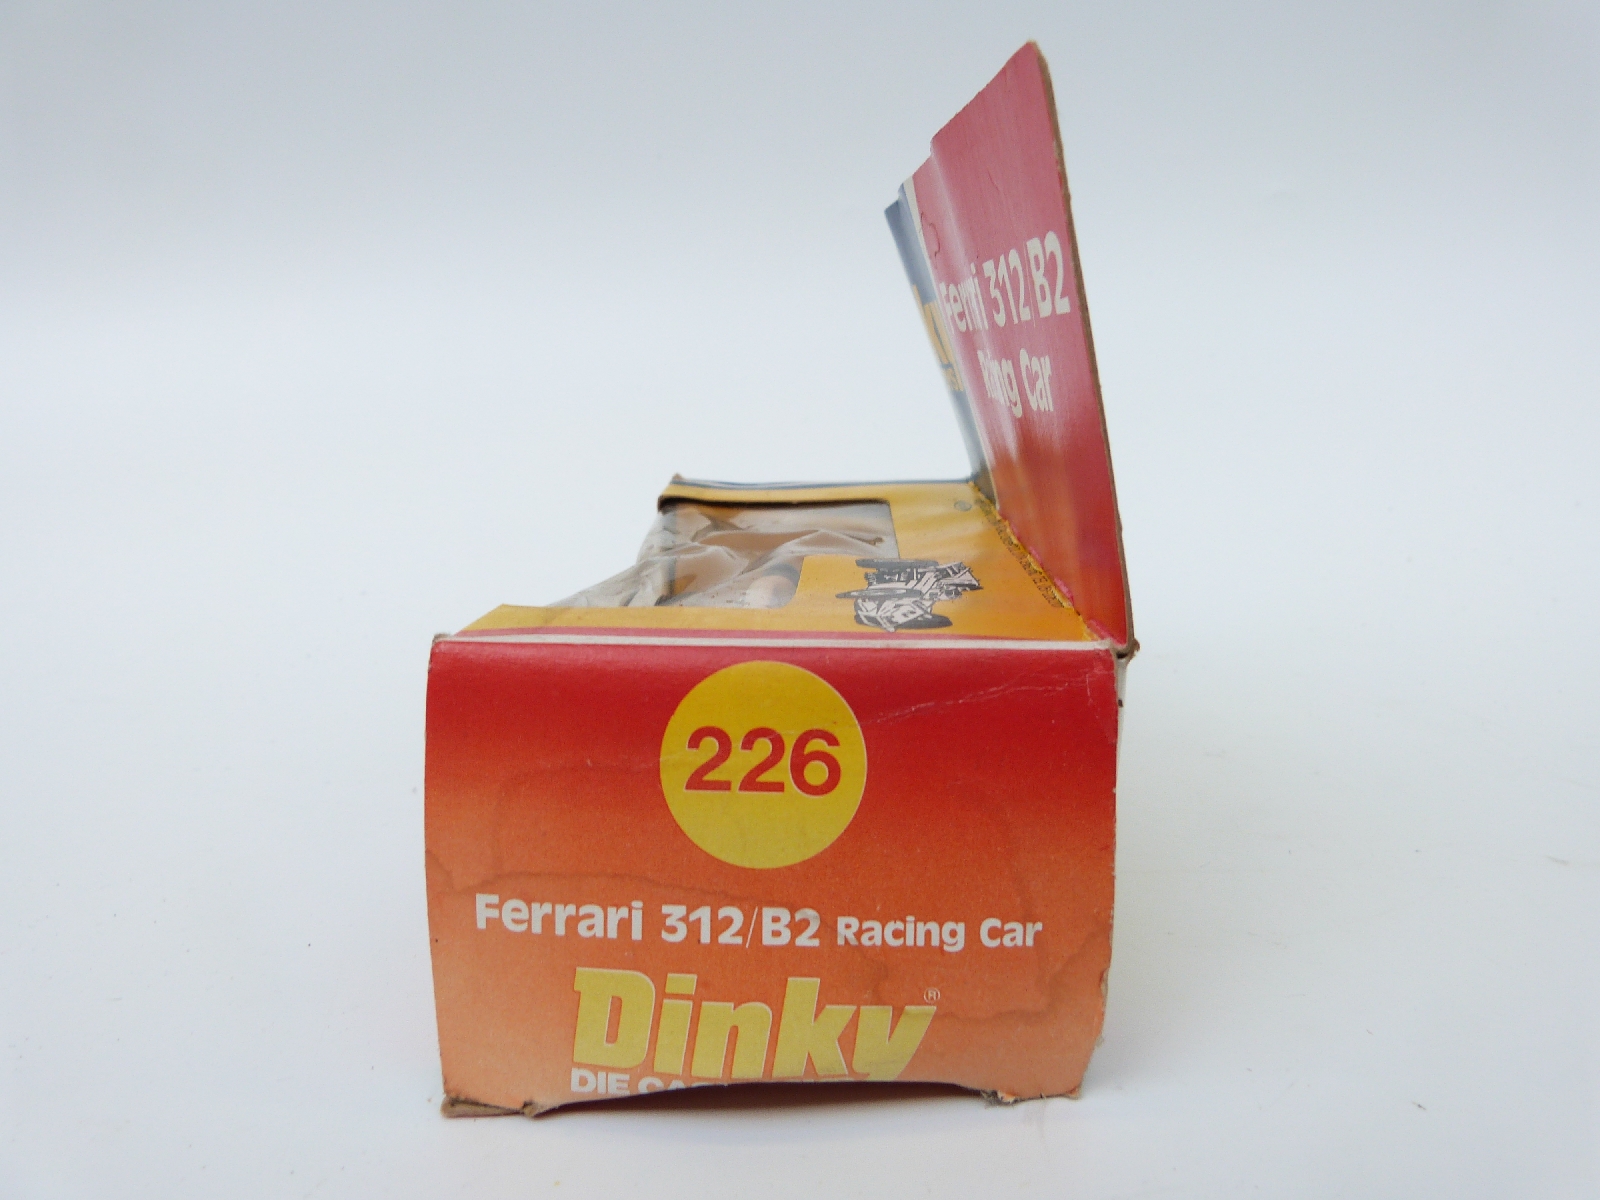 Three Dinky Toys diecast model vehicles comprising Ferrari 312/B2 Racing Car 226, - Image 14 of 17